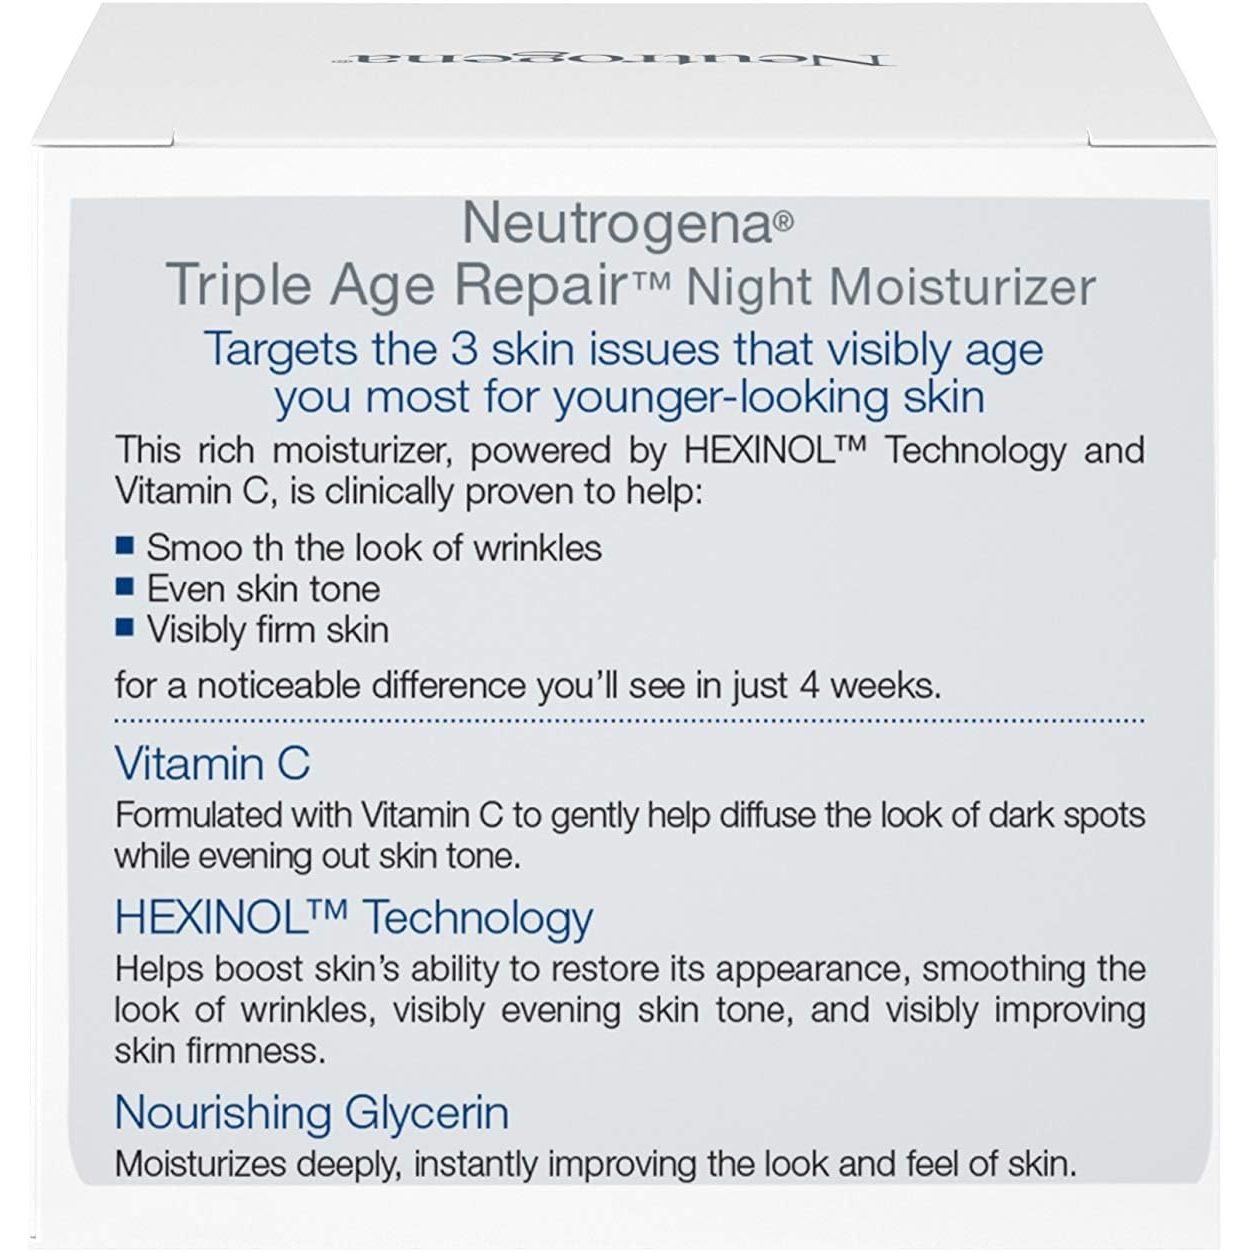 Neutrogena Triple Age Repair Night Cream, Vitamin C, Wrinkle & Dark Spot Remover, Firming Face & Neck, Glycerin & Shea Butter, 1.7 oz